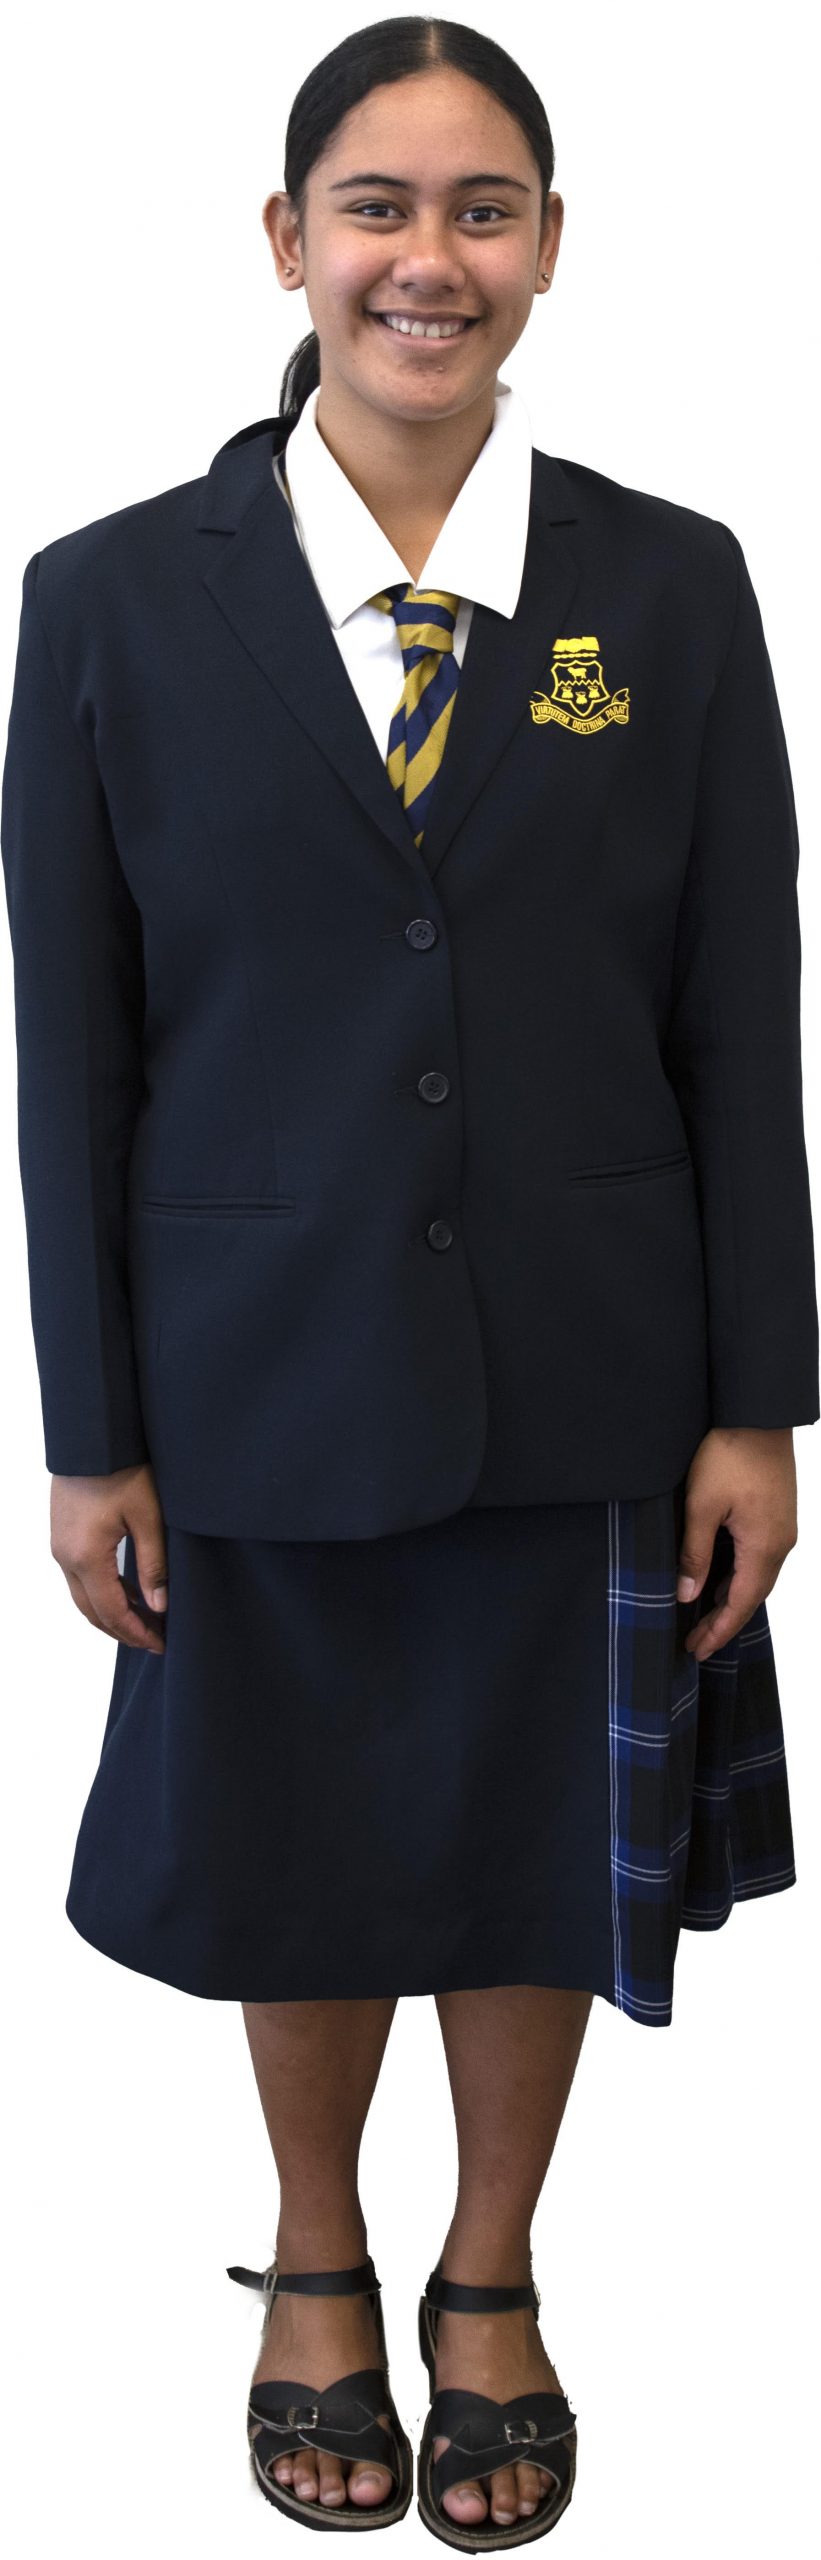 Senior uniform formal